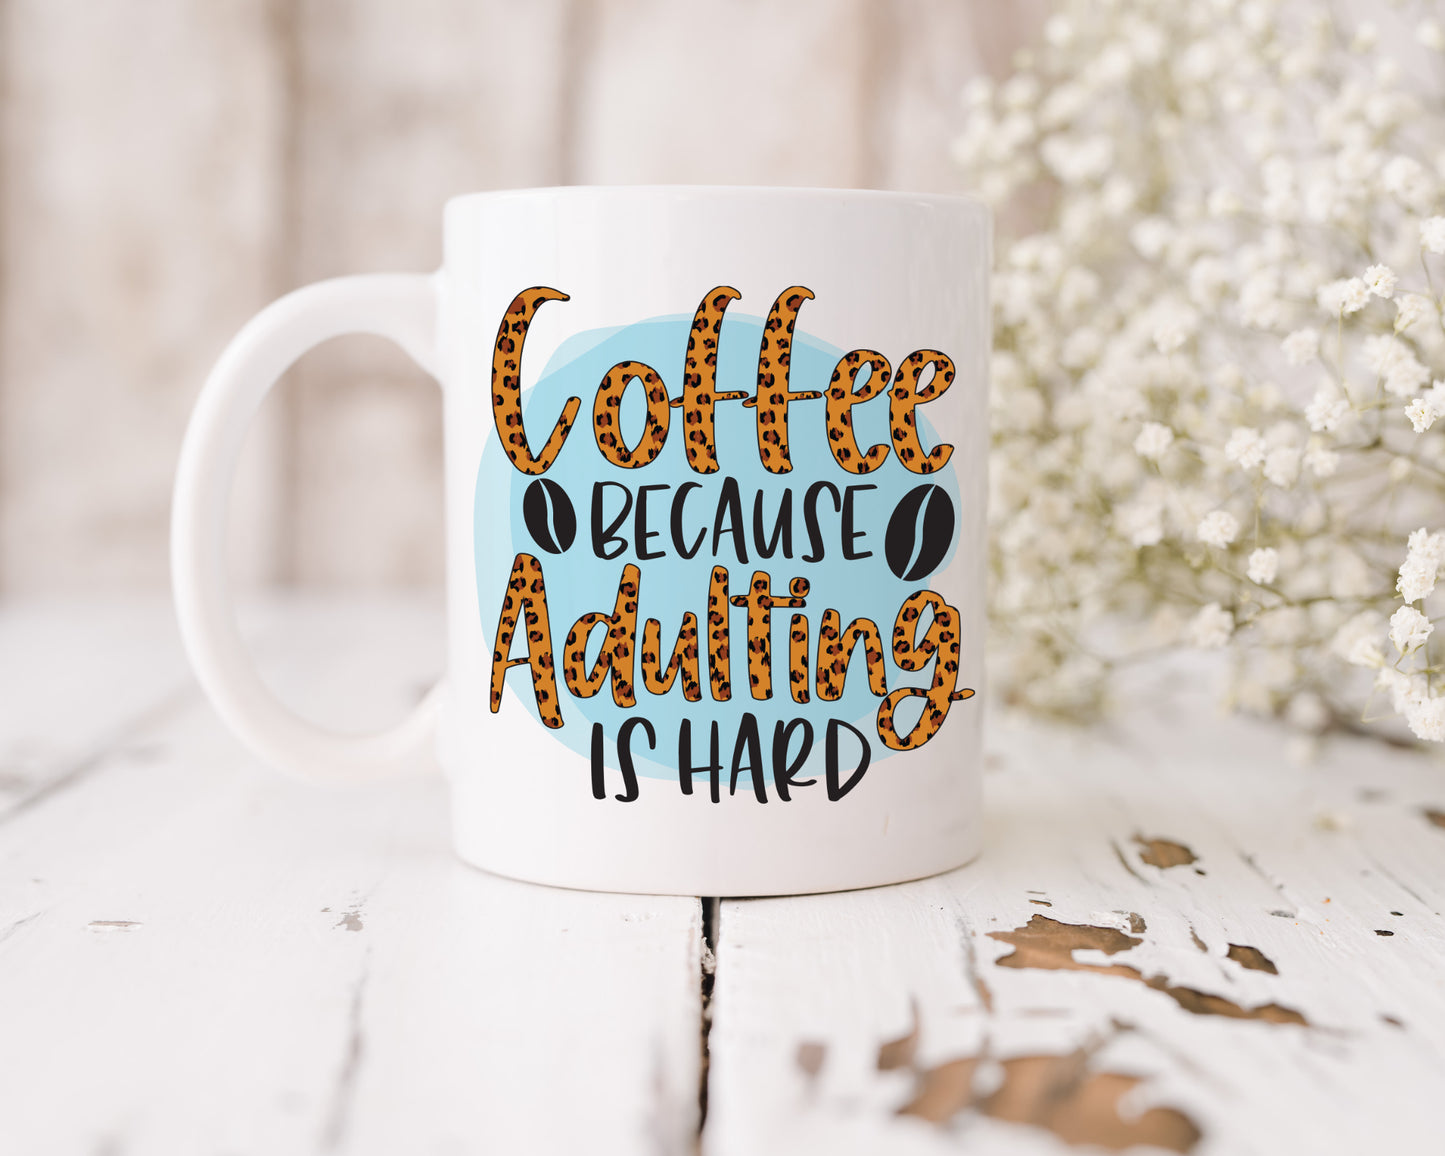 Coffee because adulting is hard mug